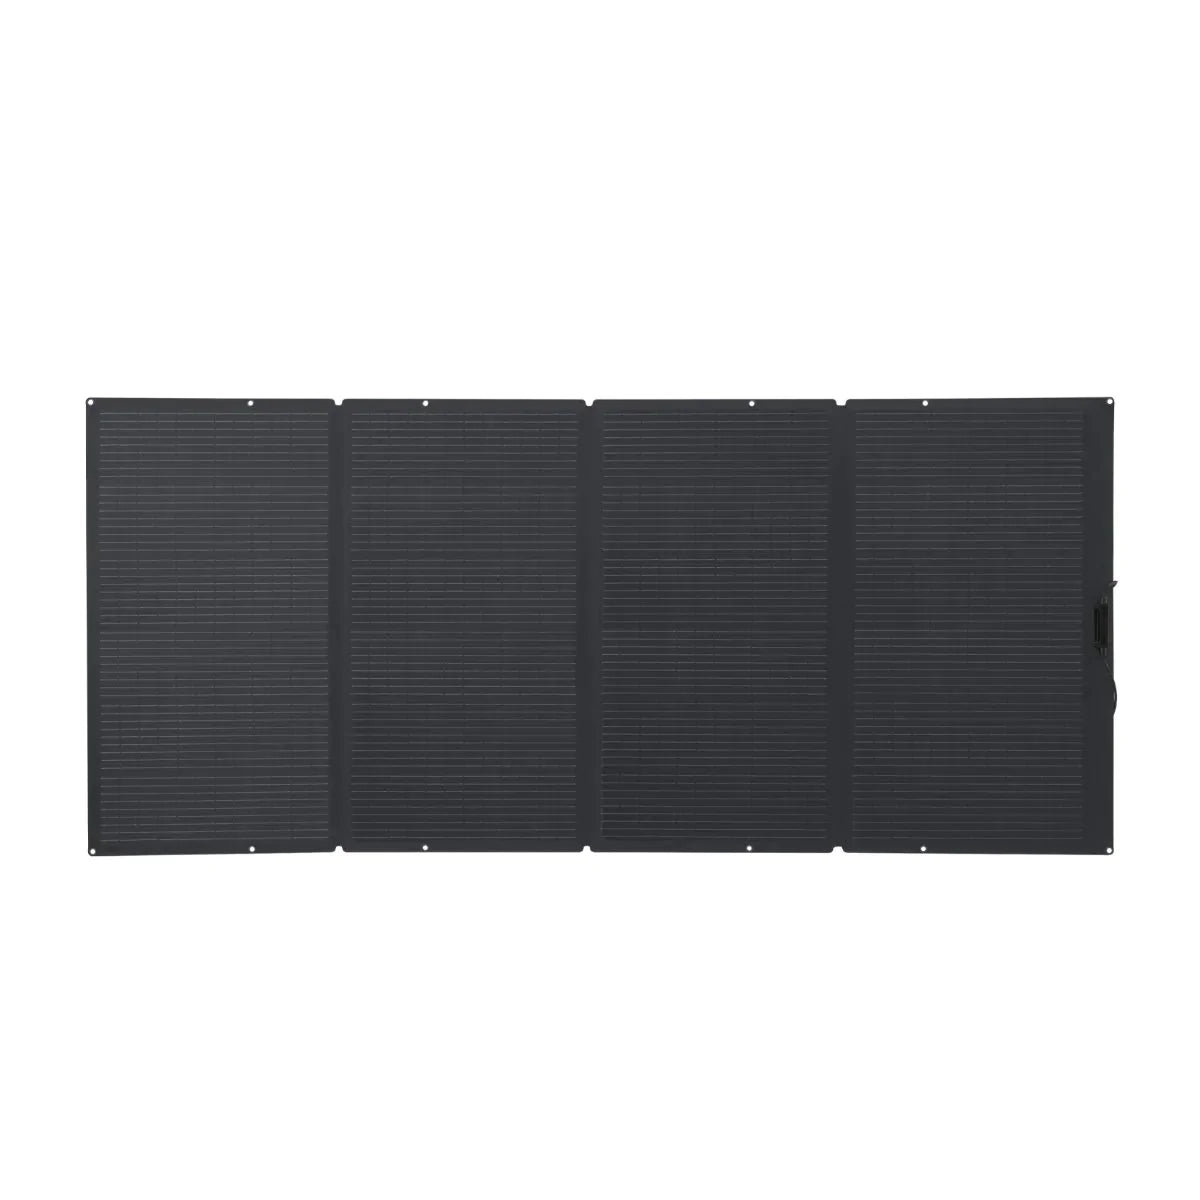 EcoFlow DELTA 1260Wh 1800W + Solar Panels Complete Solar Generator Kit - EF-EFDELTA1300-AM+XT60+RS-M100+RS-30102 - Avanquil